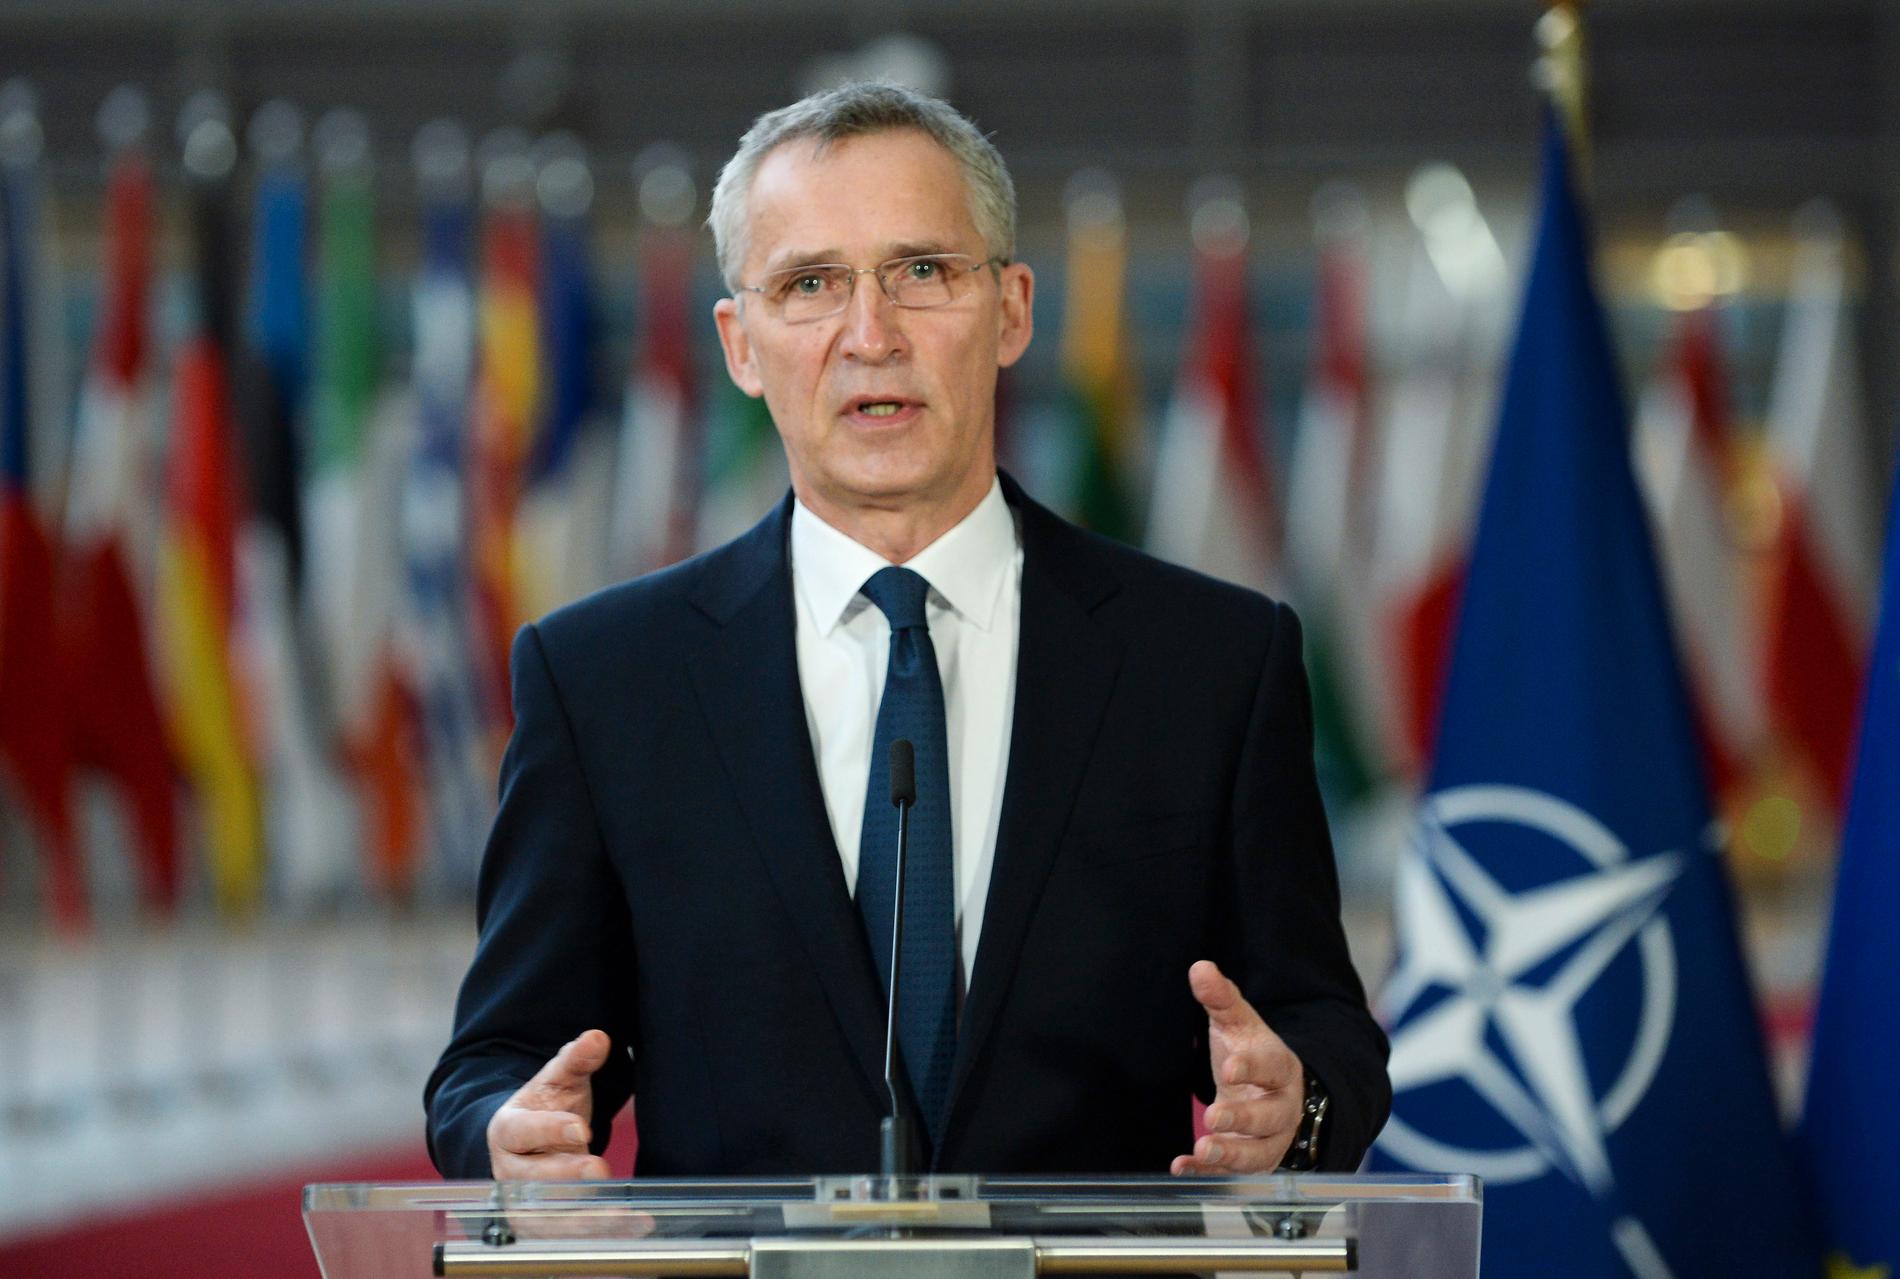 Natochefen Jens Stoltenberg höll ett krismöte under torsdagen.